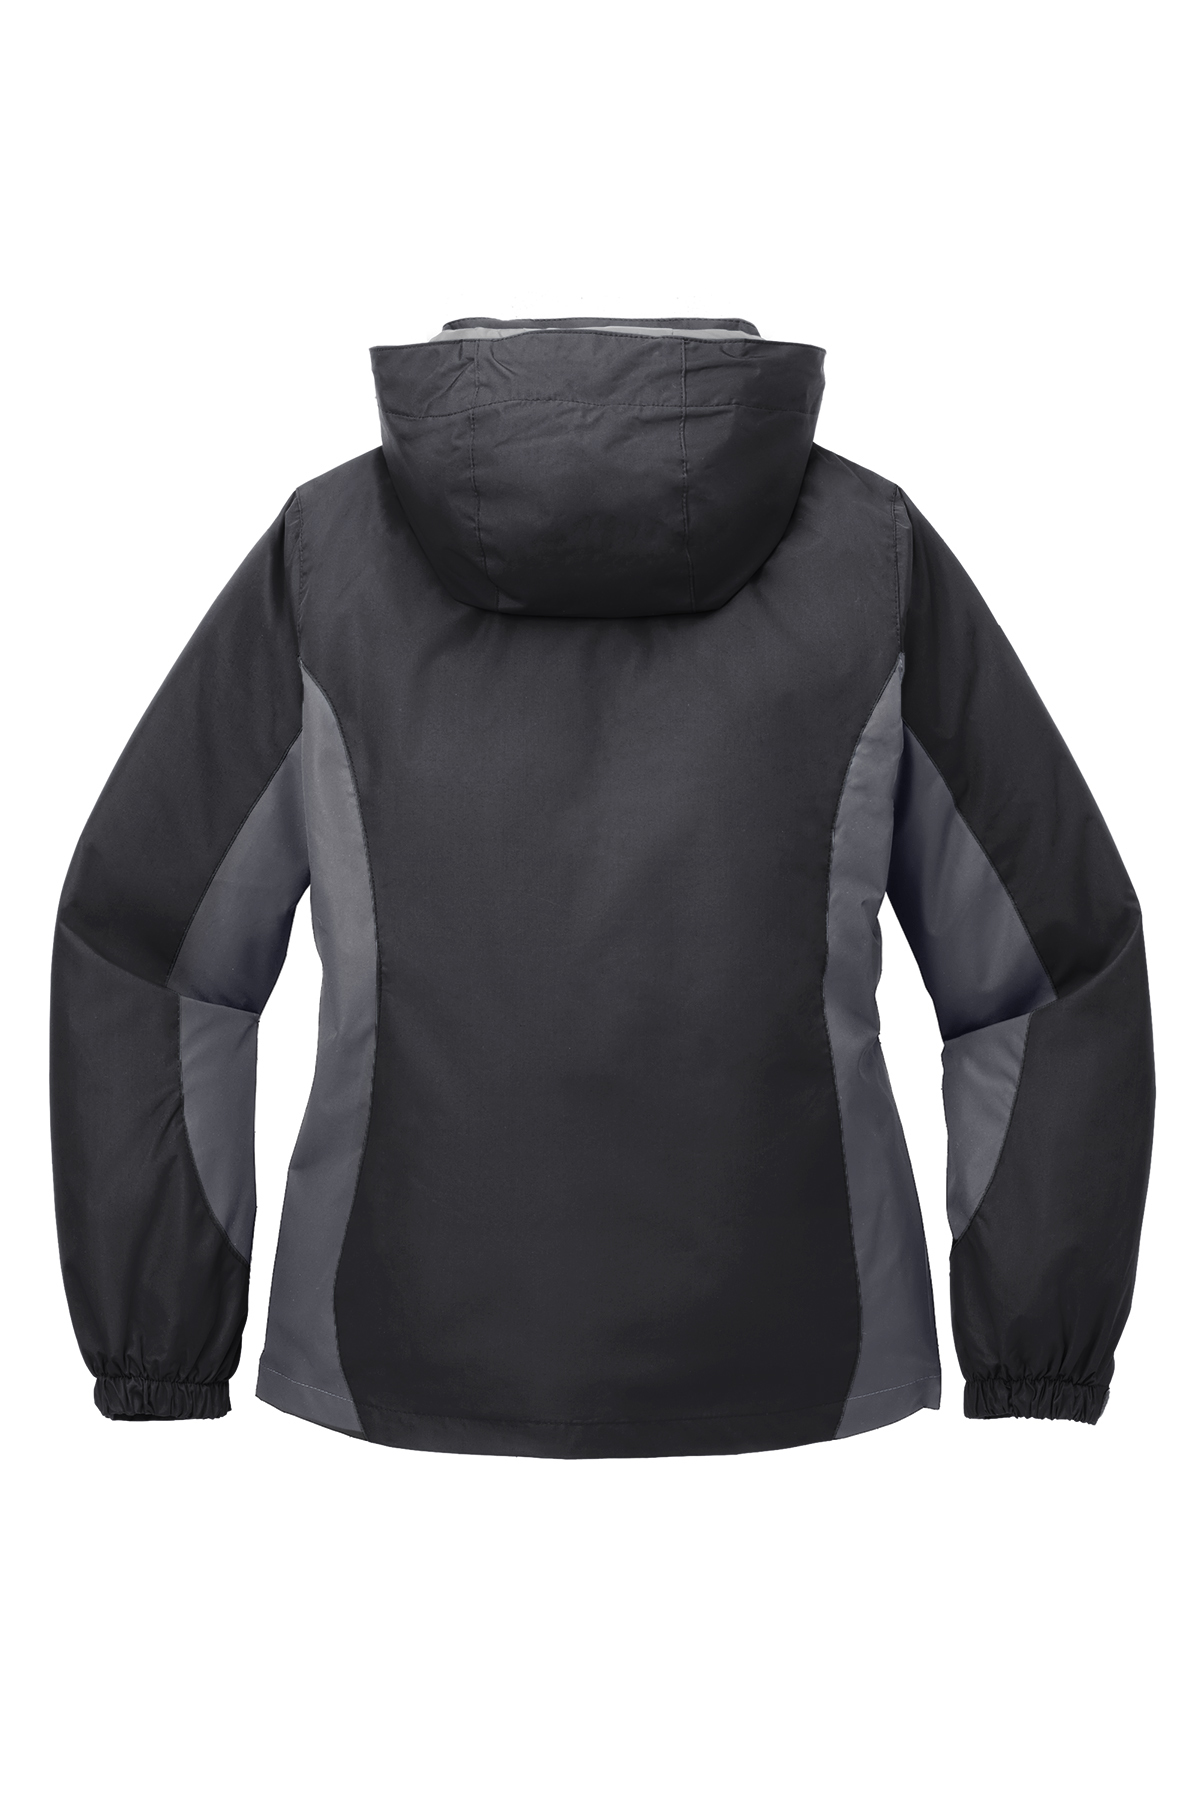 Authority Colorblock | Jacket 3-in-1 | Port Ladies SanMar Product